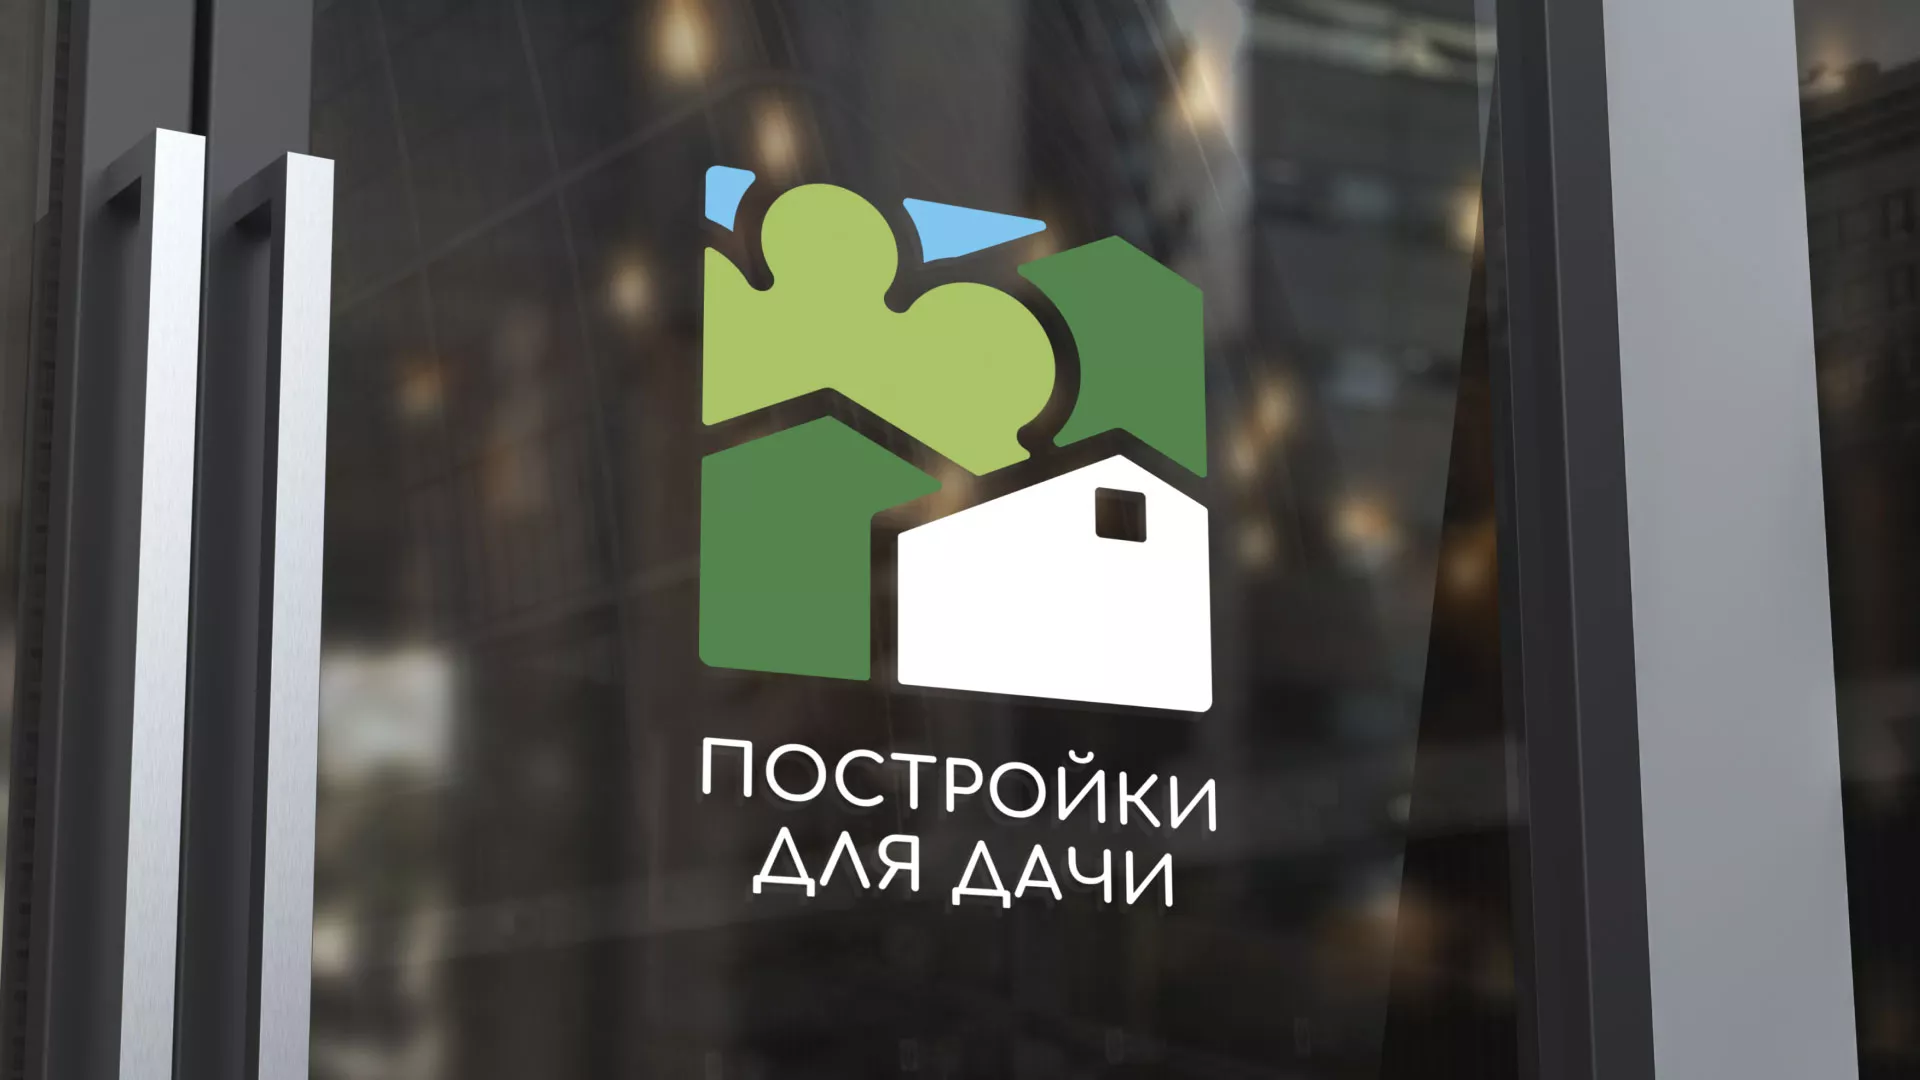 Разработка логотипа в Пласте для компании «Постройки для дачи»